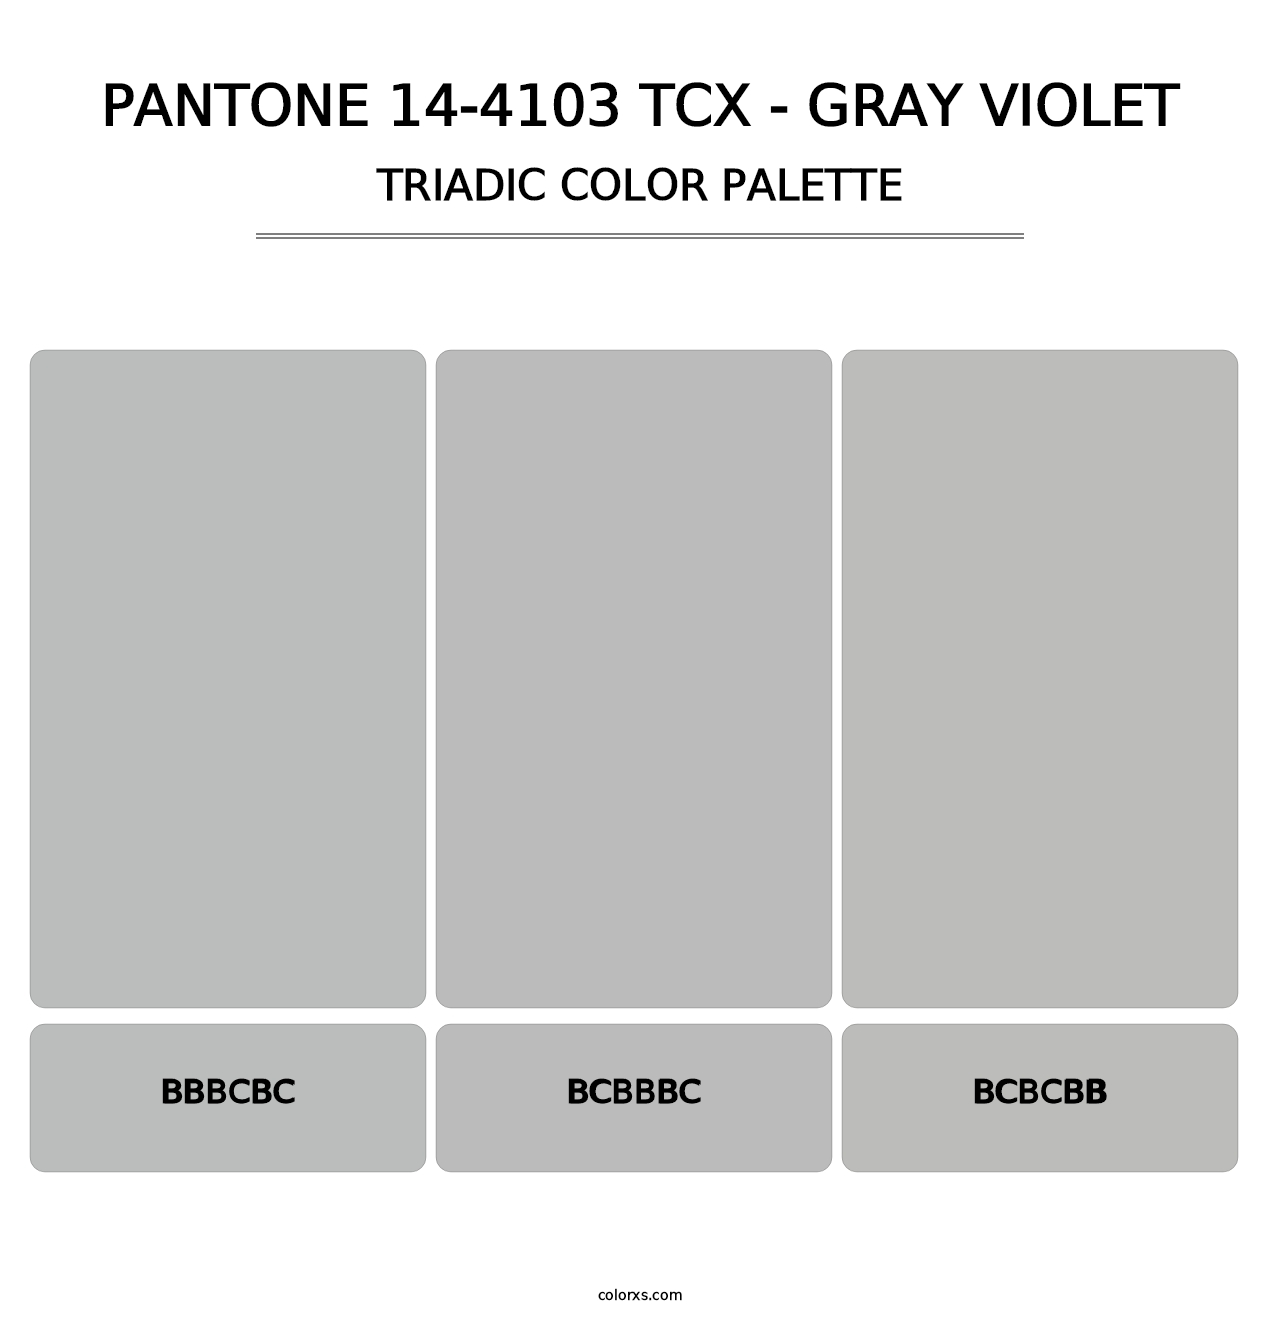 PANTONE 14-4103 TCX - Gray Violet - Triadic Color Palette